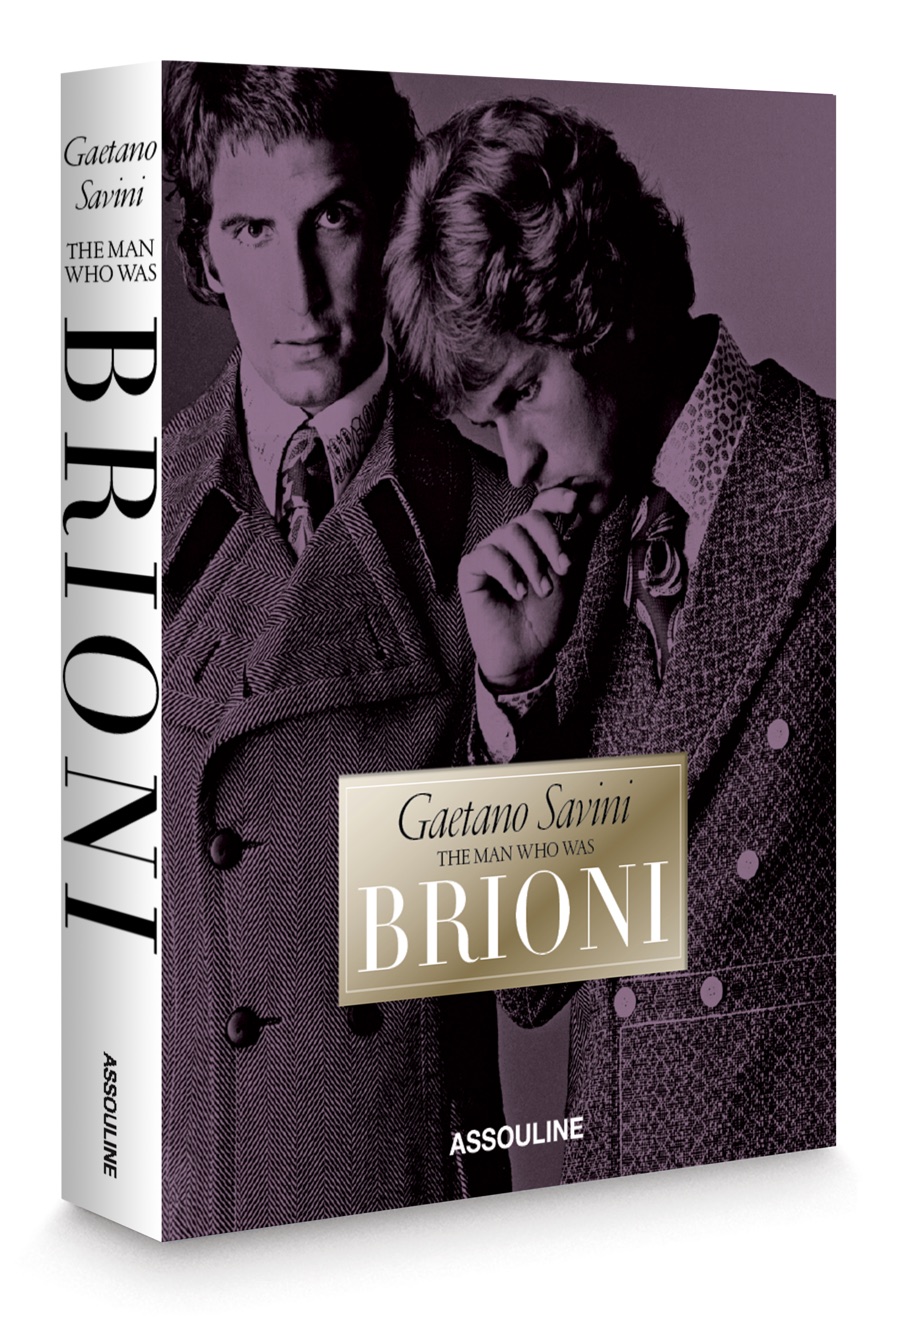 Brioni Gaetano Savini Book Cover Artwork